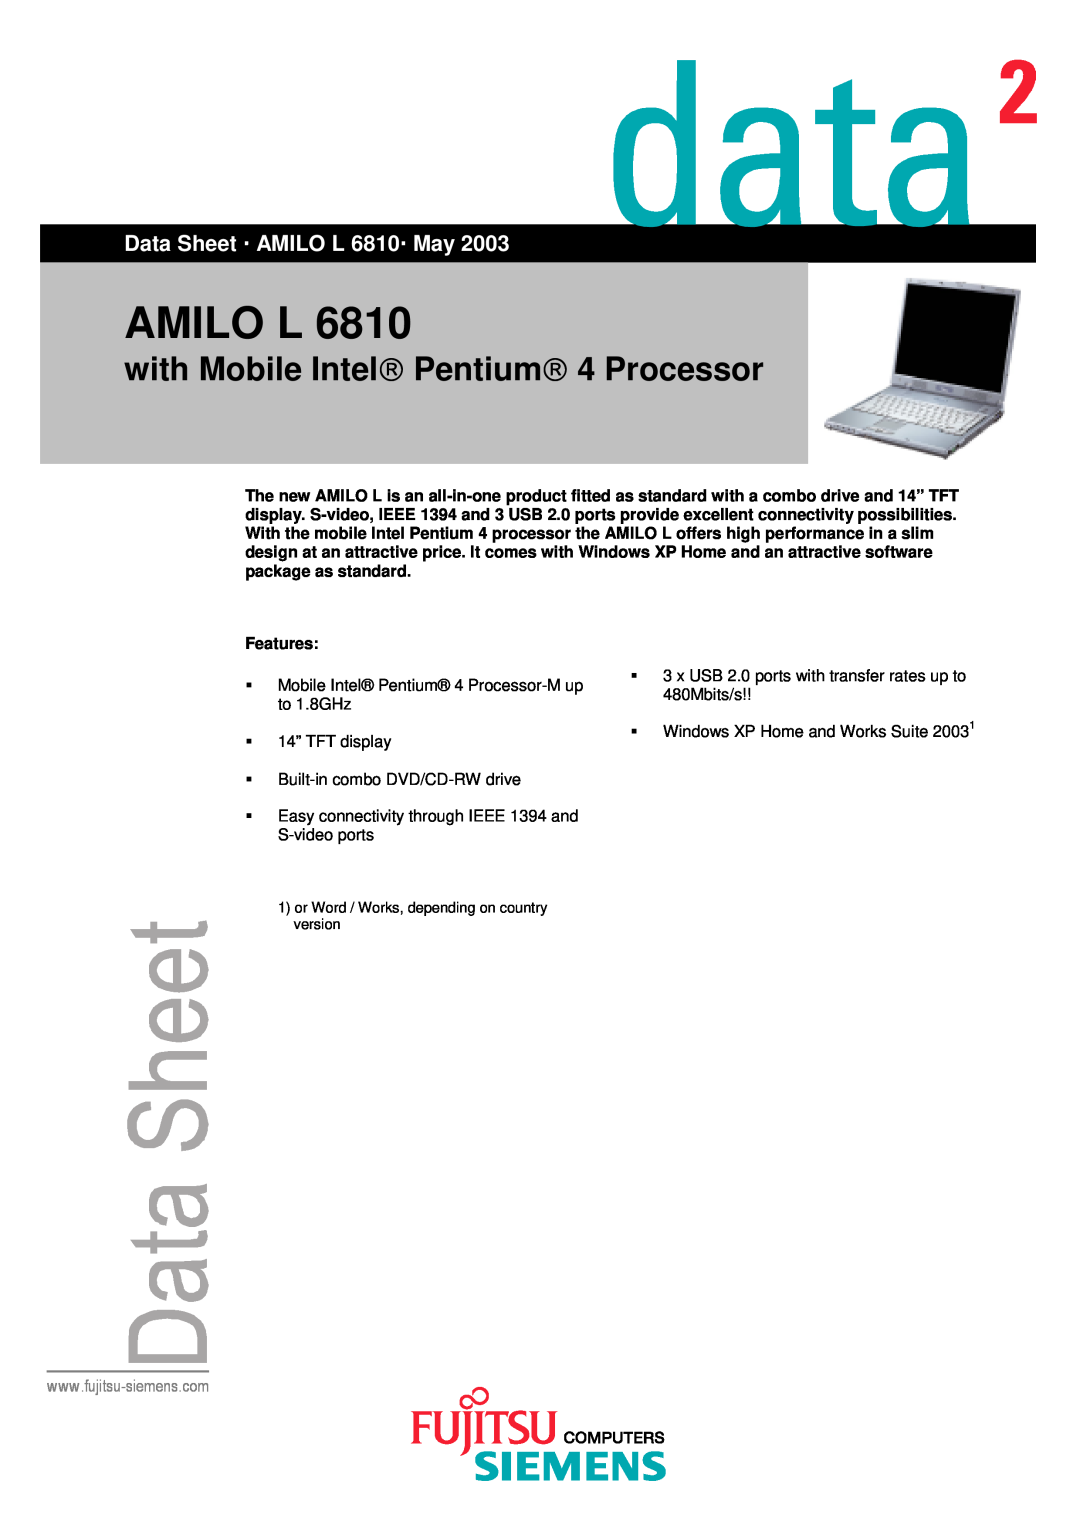 Fujitsu Siemens Computers manual Amilo L, with Mobile Intel Pentium 4 Processor, Data Sheet AMILO L 6810 May 